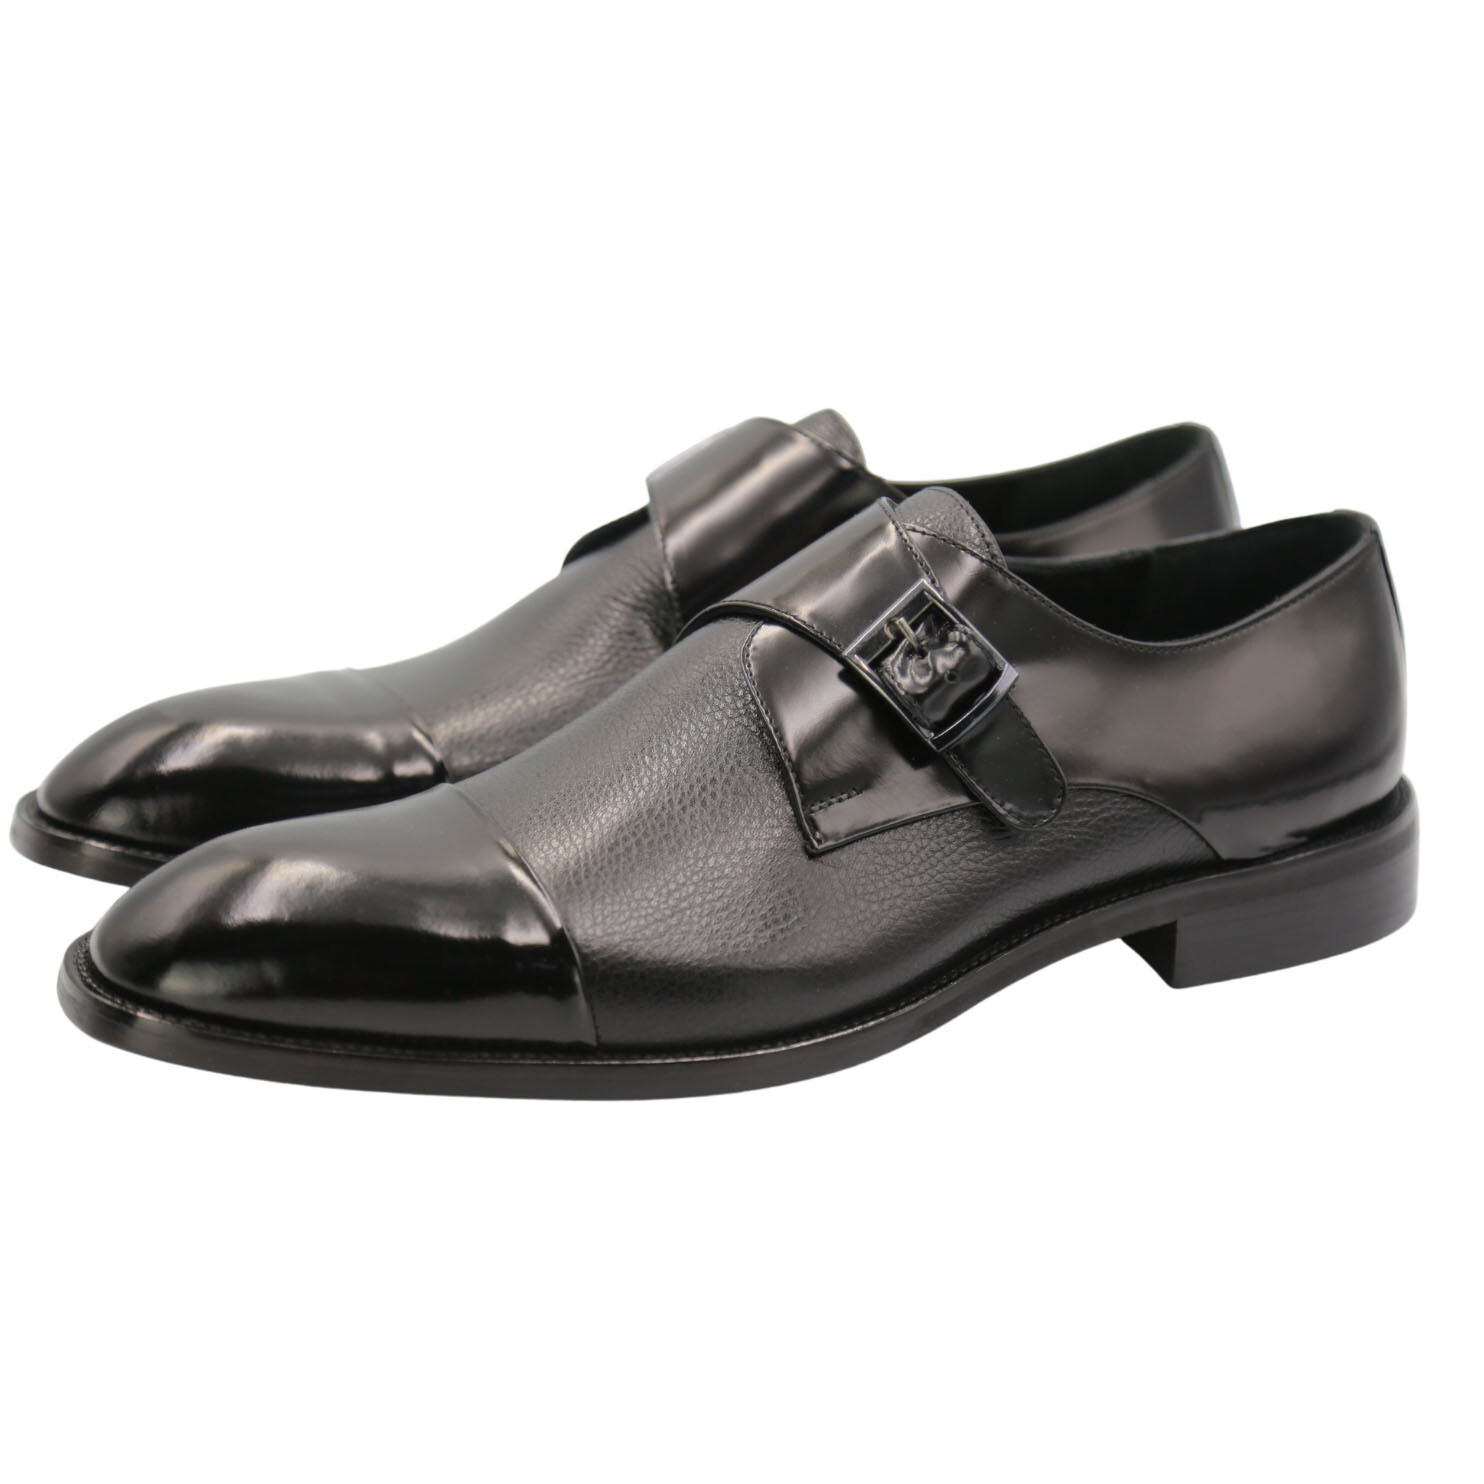 Men's Comfortable Leather Formal Shoe